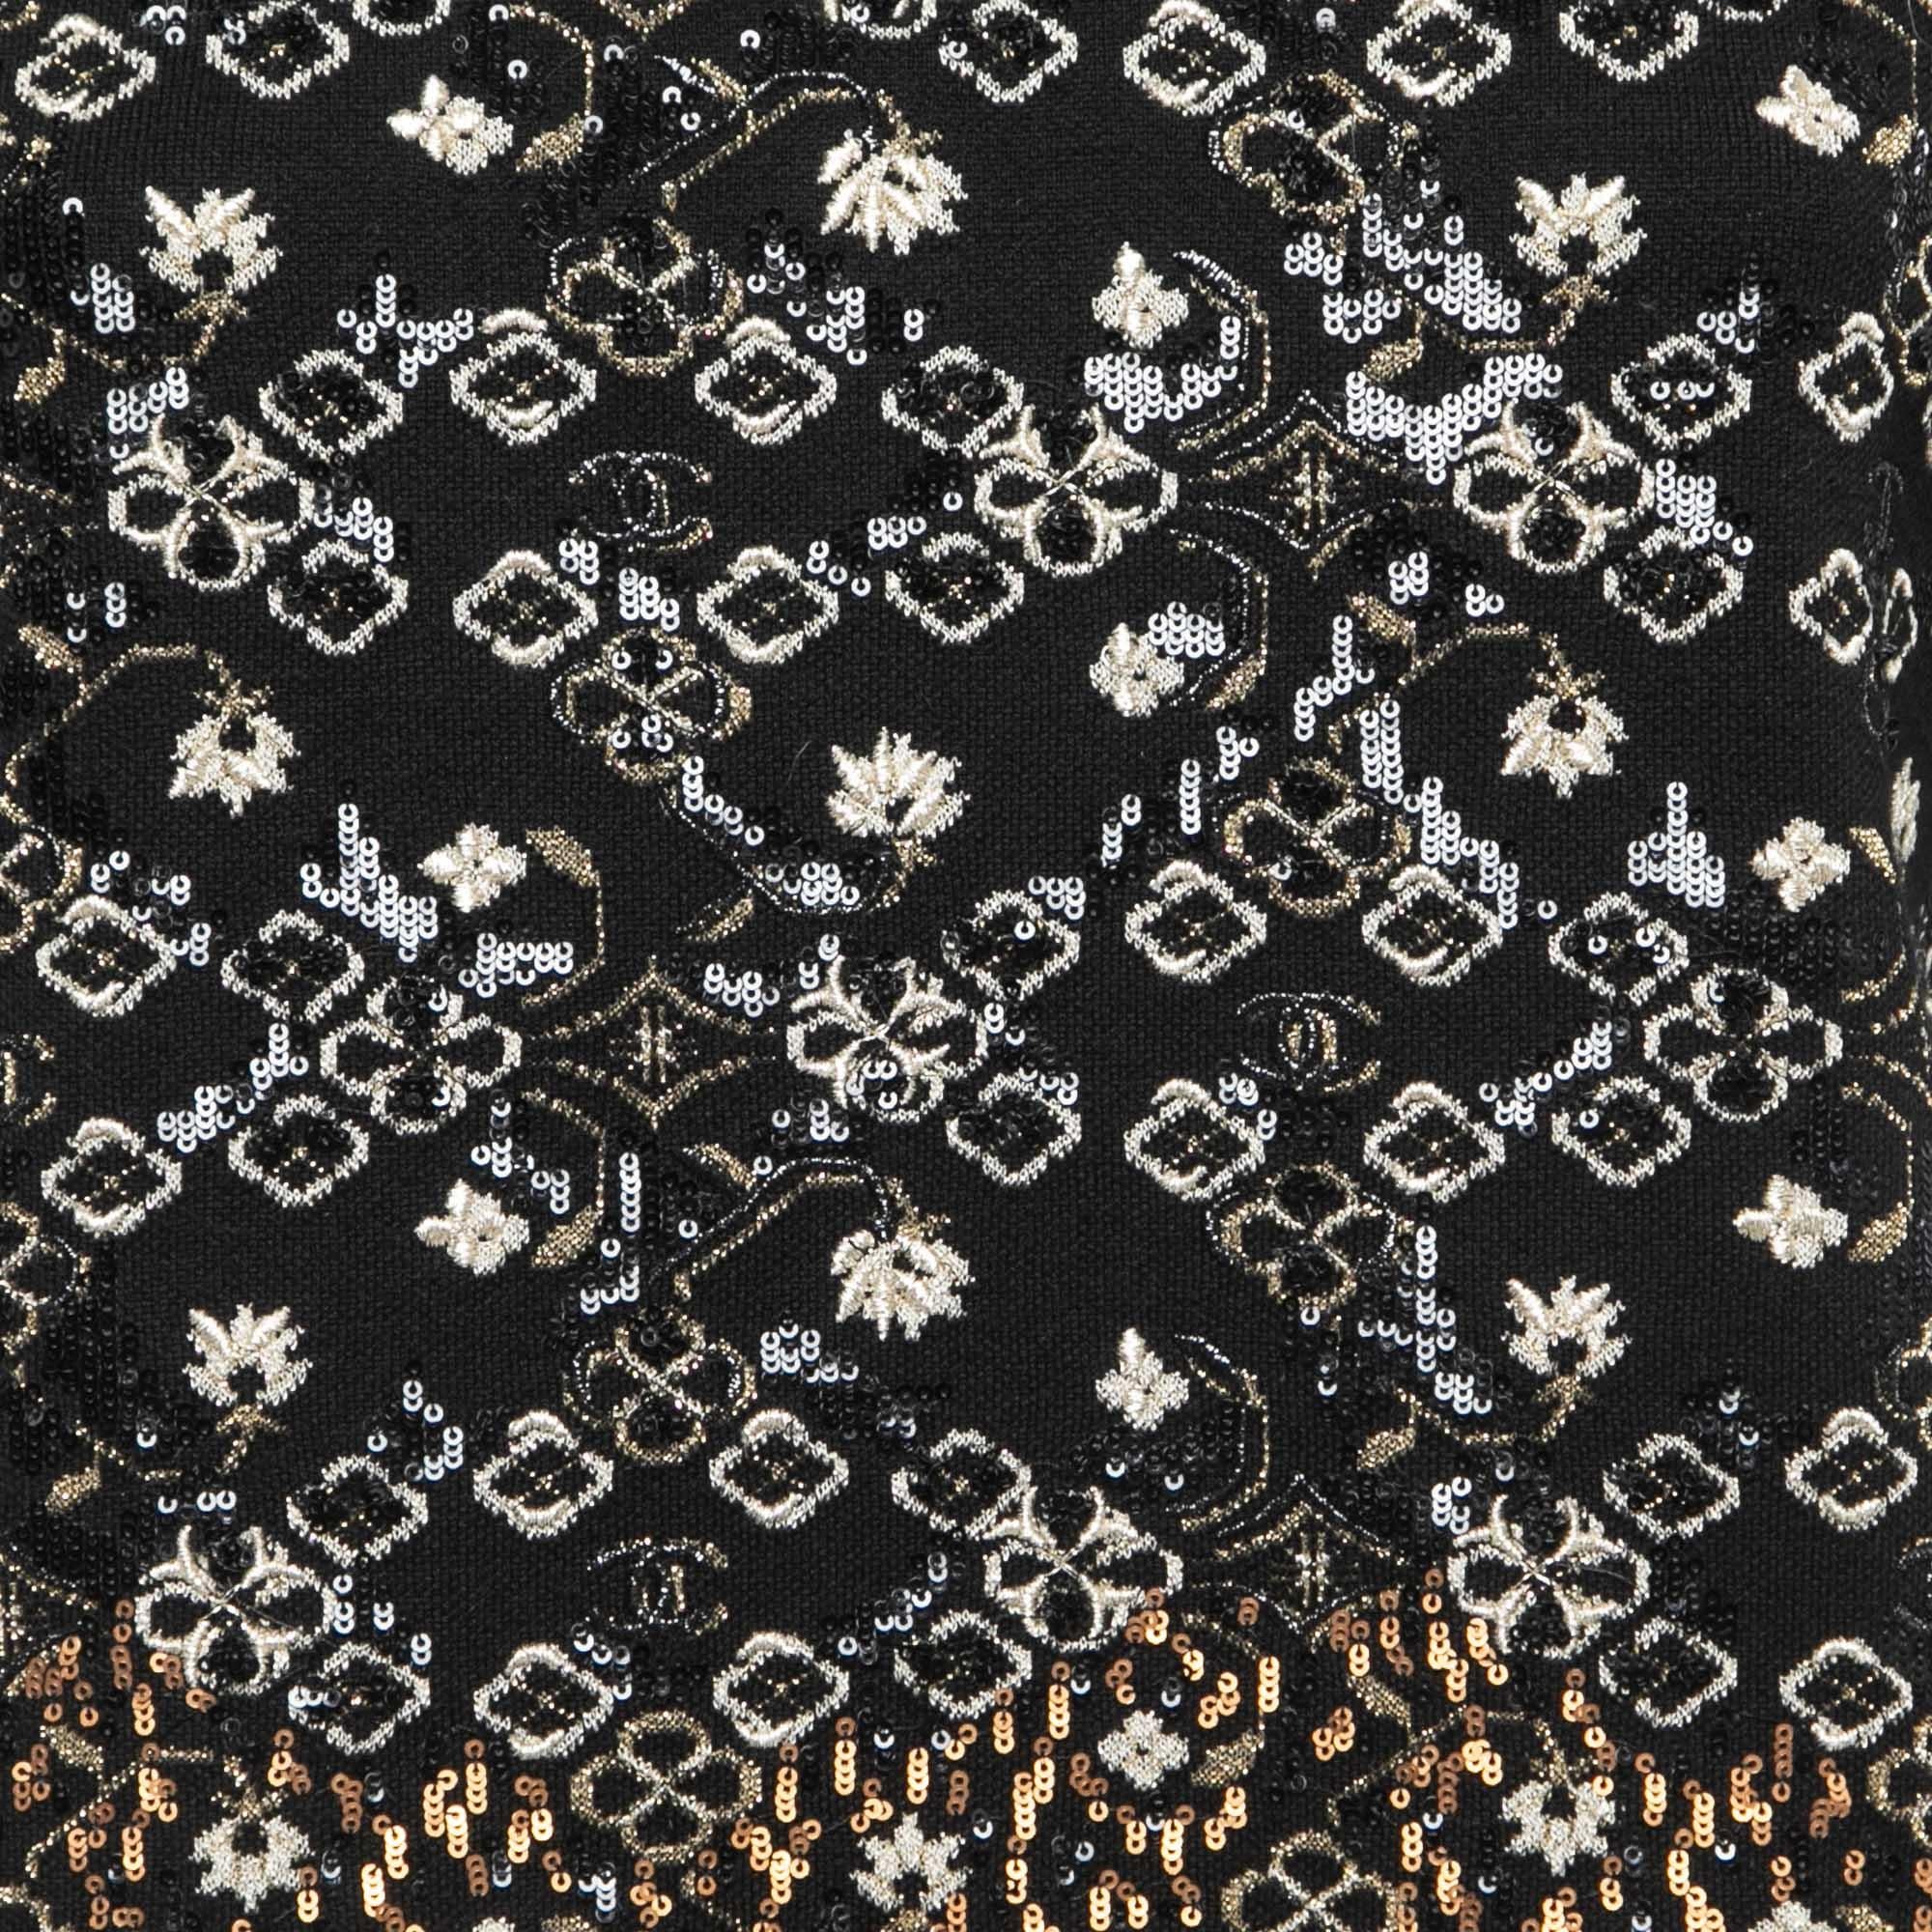 Chanel Black Knit Sequin Embroidered Jumper  In Excellent Condition For Sale In Dubai, Al Qouz 2